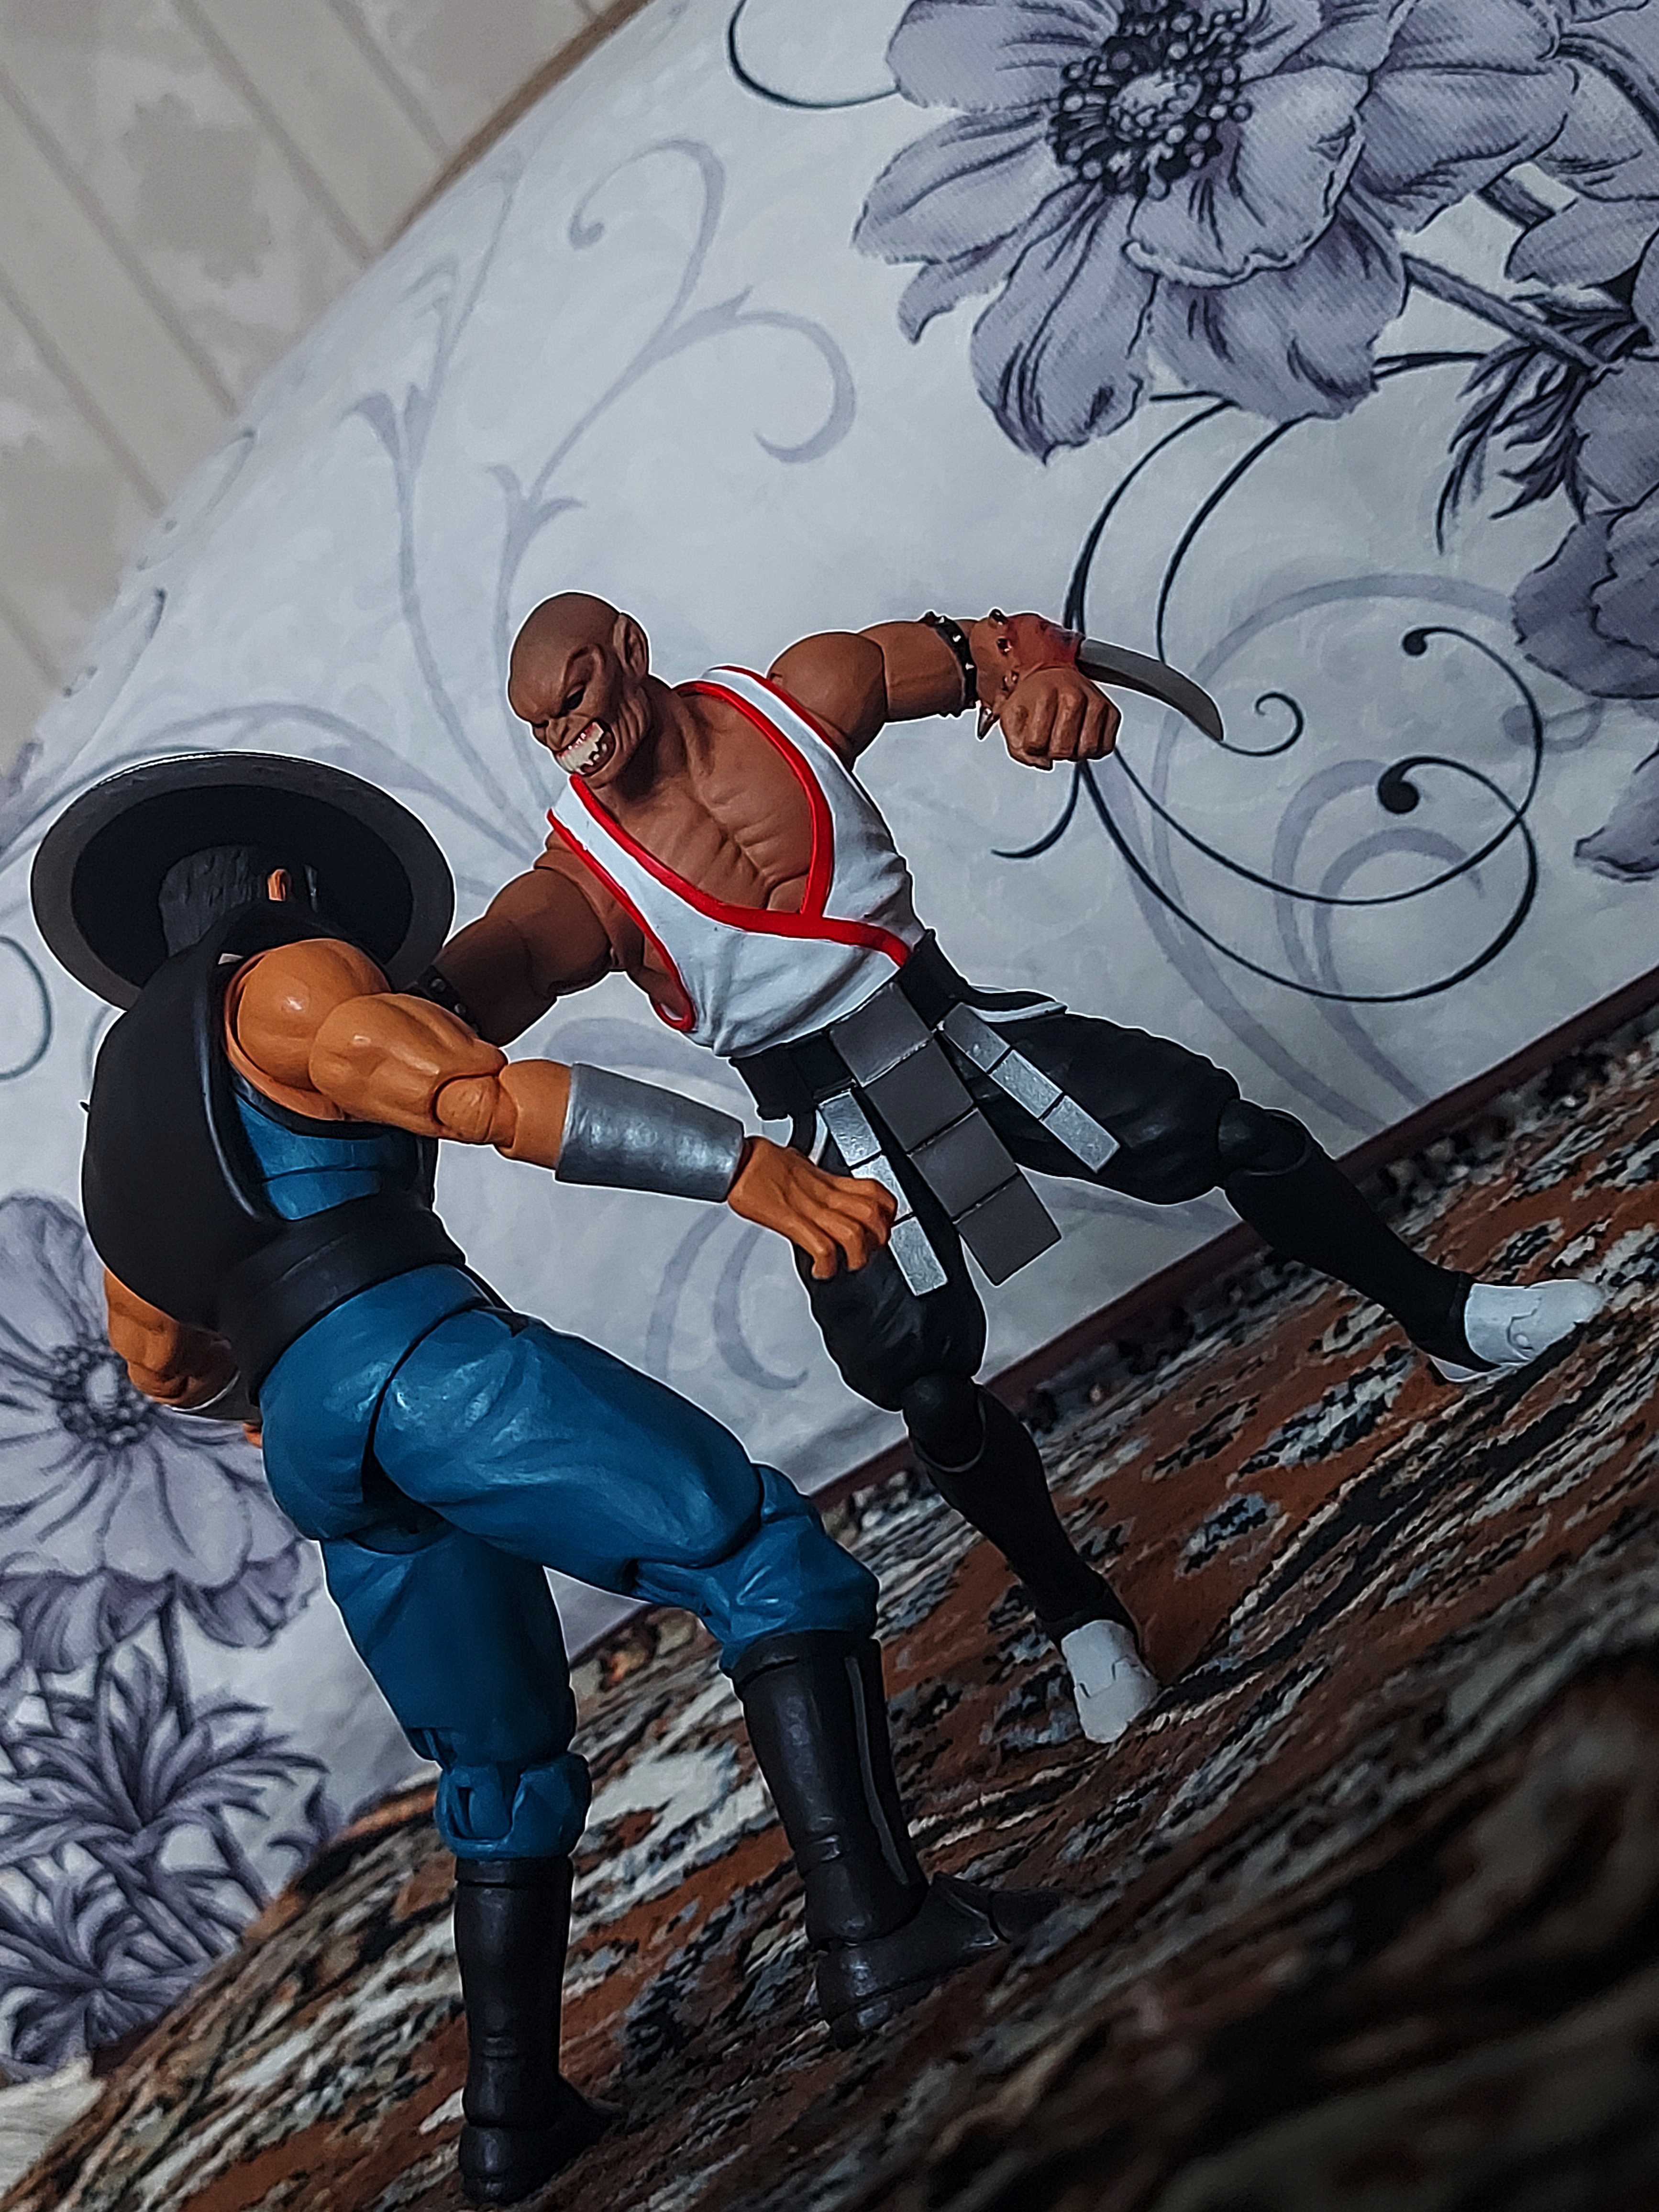 BARAKA - Mortal Kombat Action Figure – Storm Collectibles